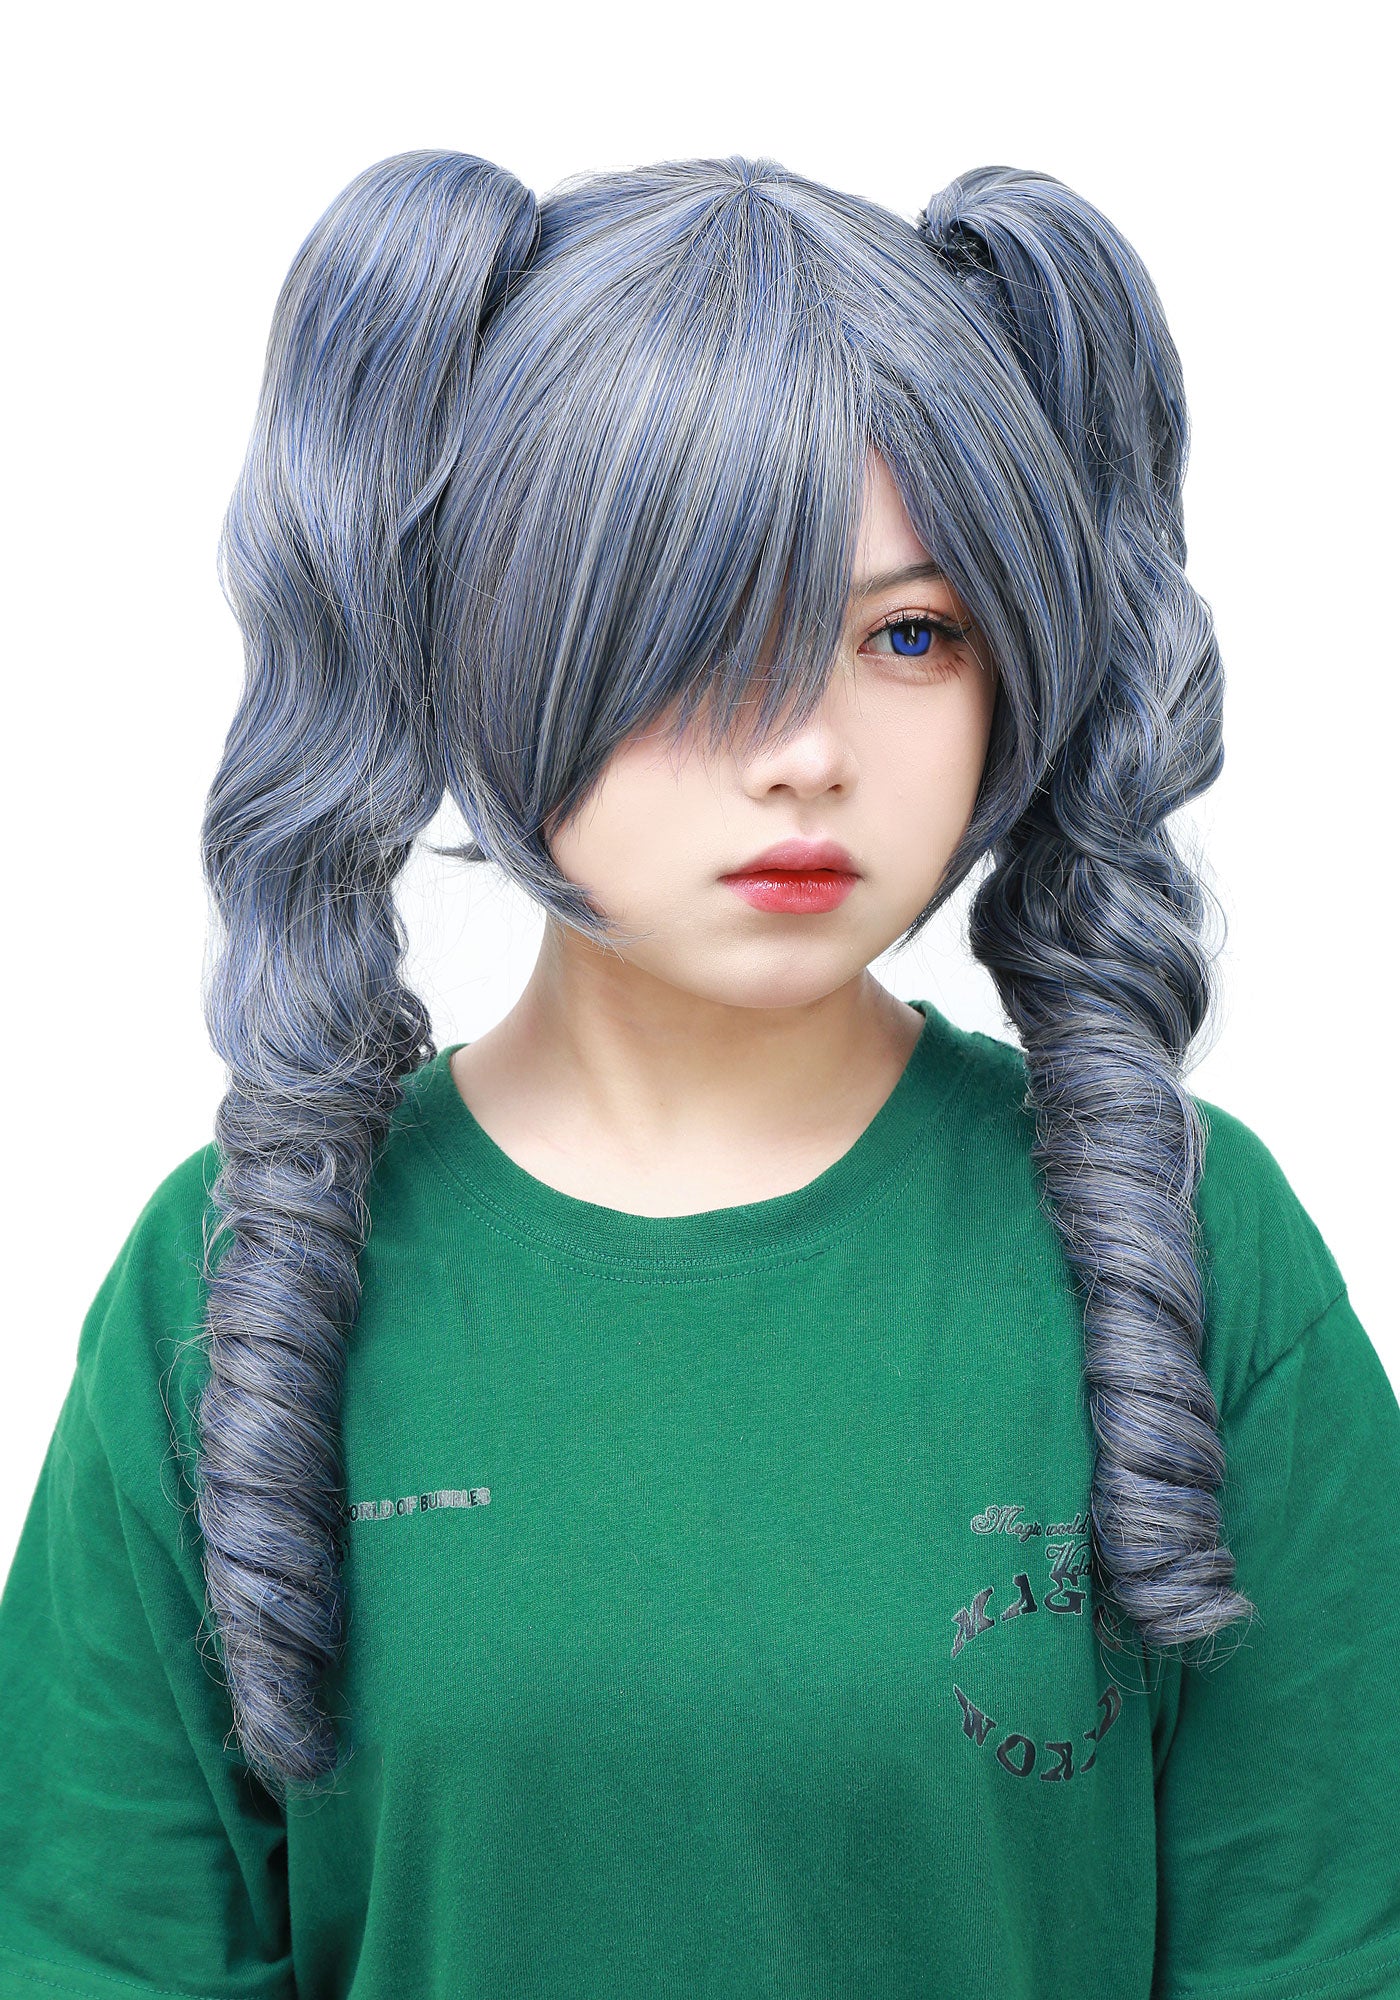 Kuroshitsuji Ciel Phantomhive Cosplay Wig Goth Cute Loli Curly Long Hair Two Pigtails Gray One size